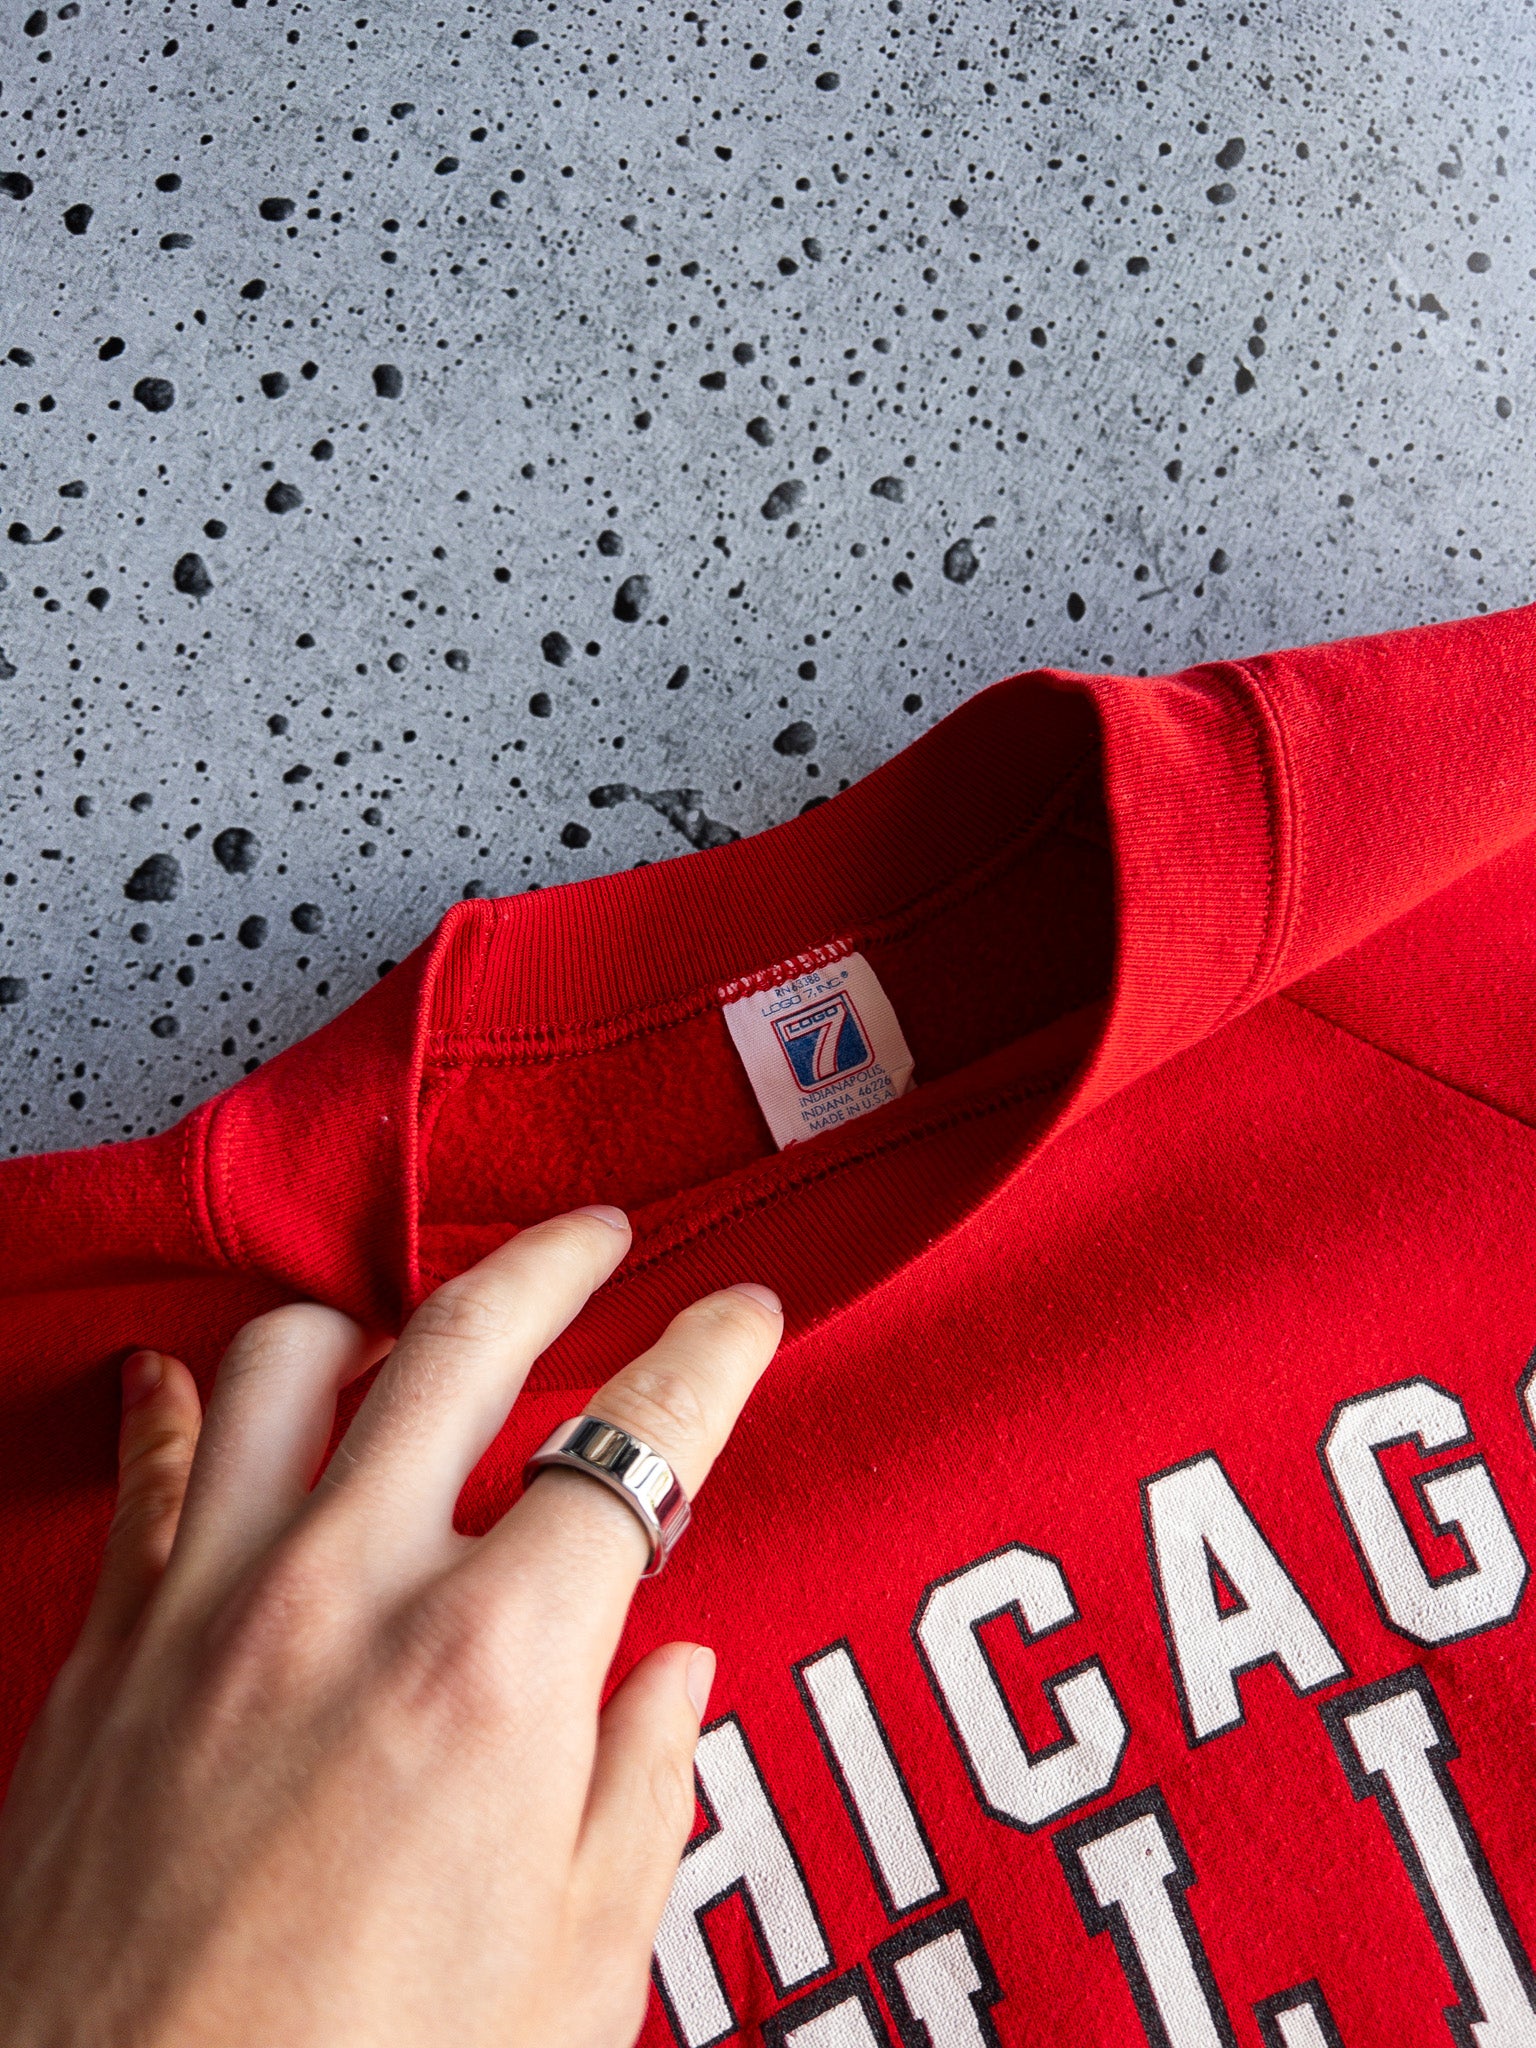 Vintage Chicago Bulls Sweatshirt (L)